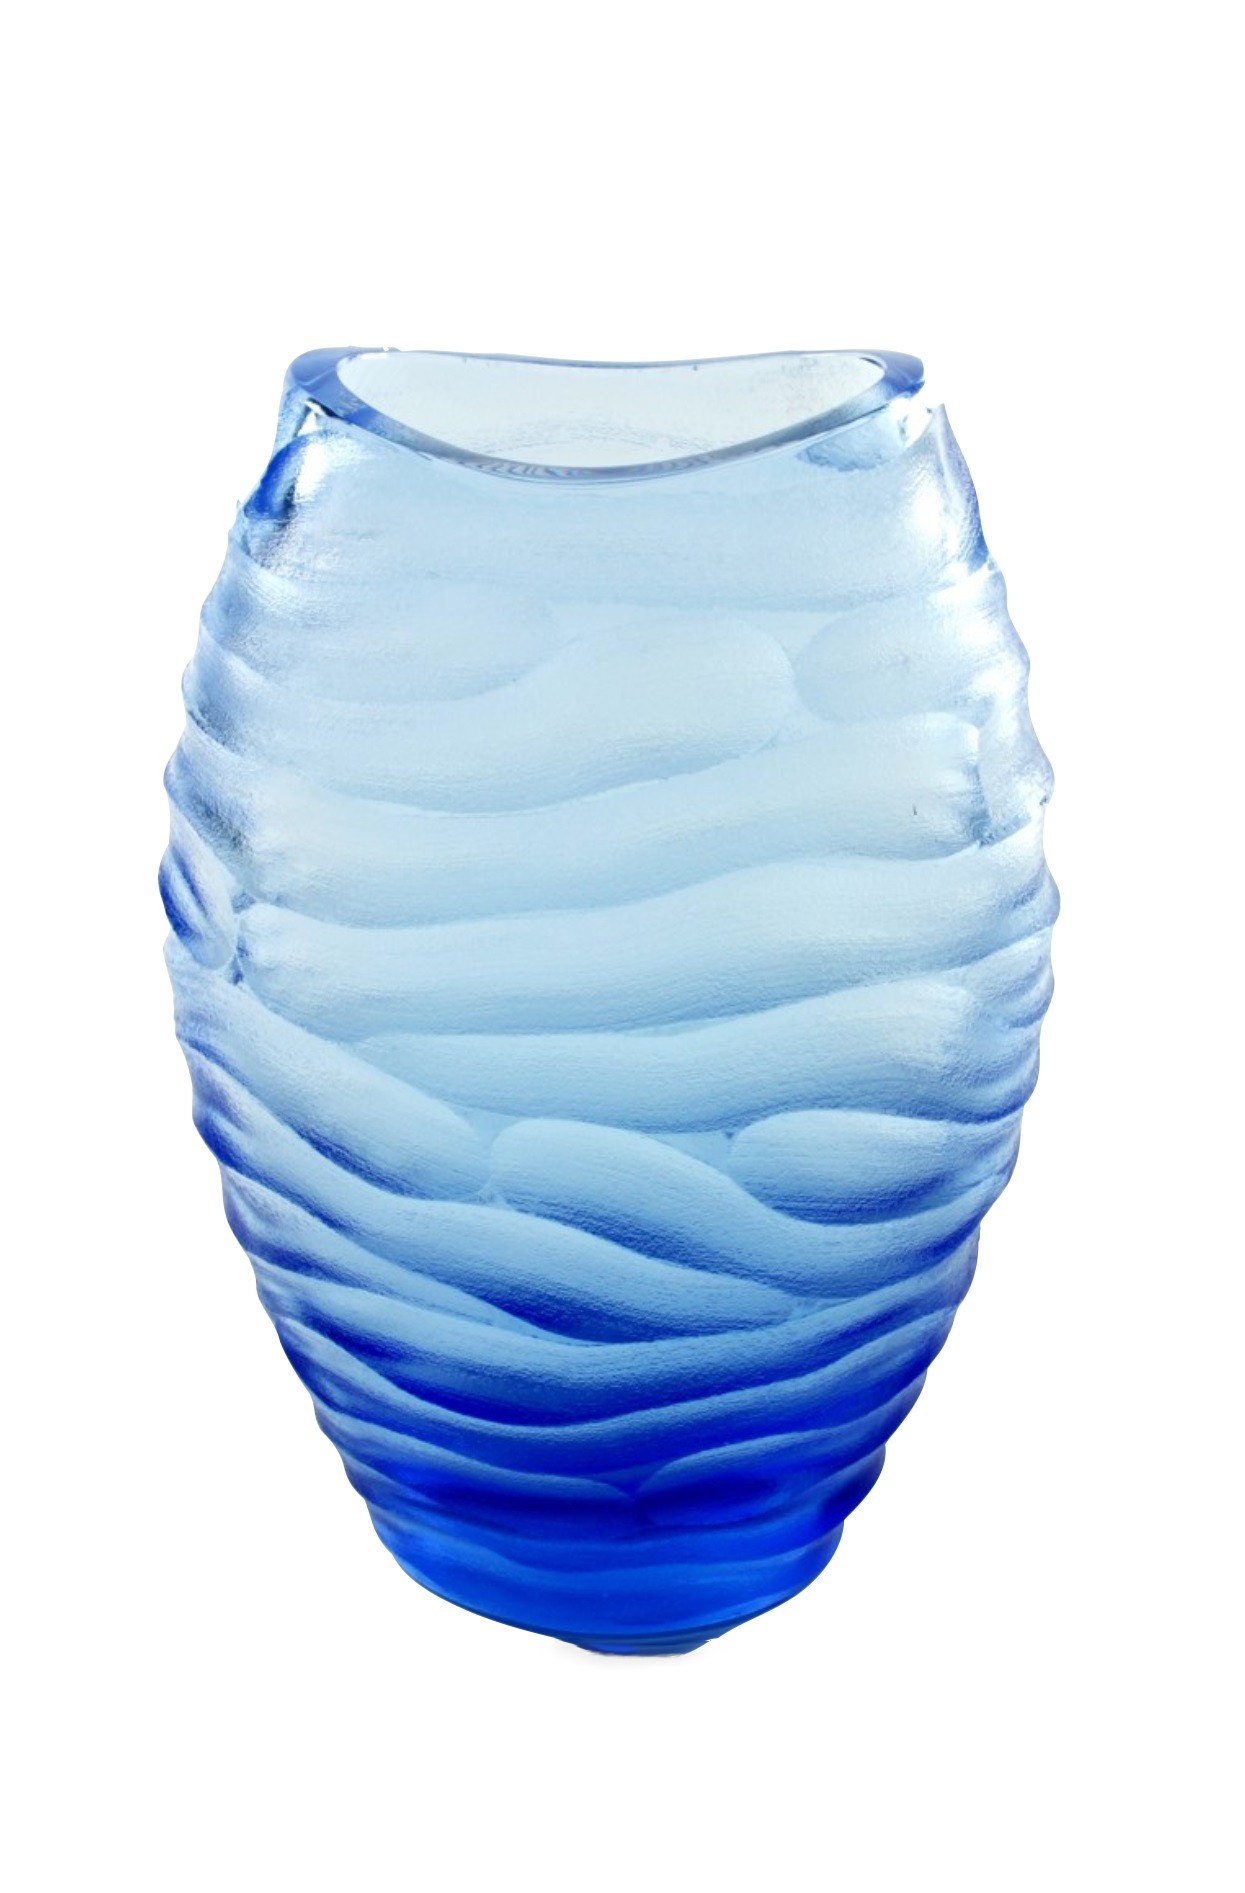 Crystalex - R-SP-1101, Vase